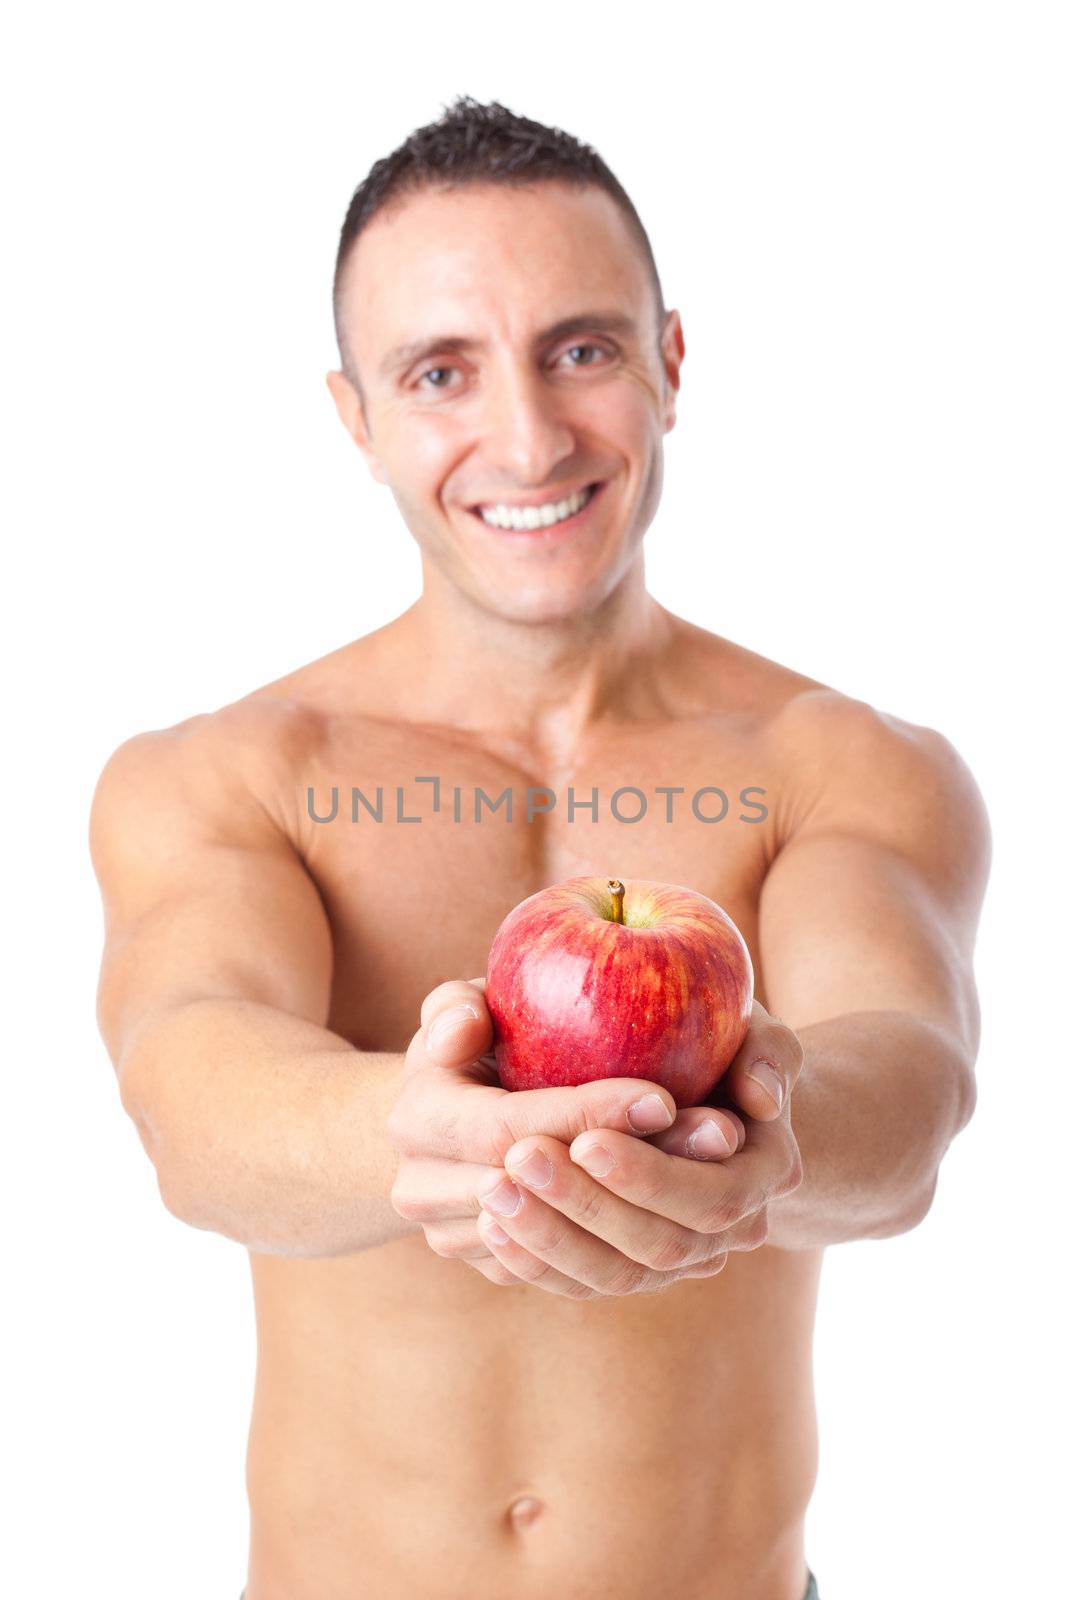 a bodybuilder holding an apple